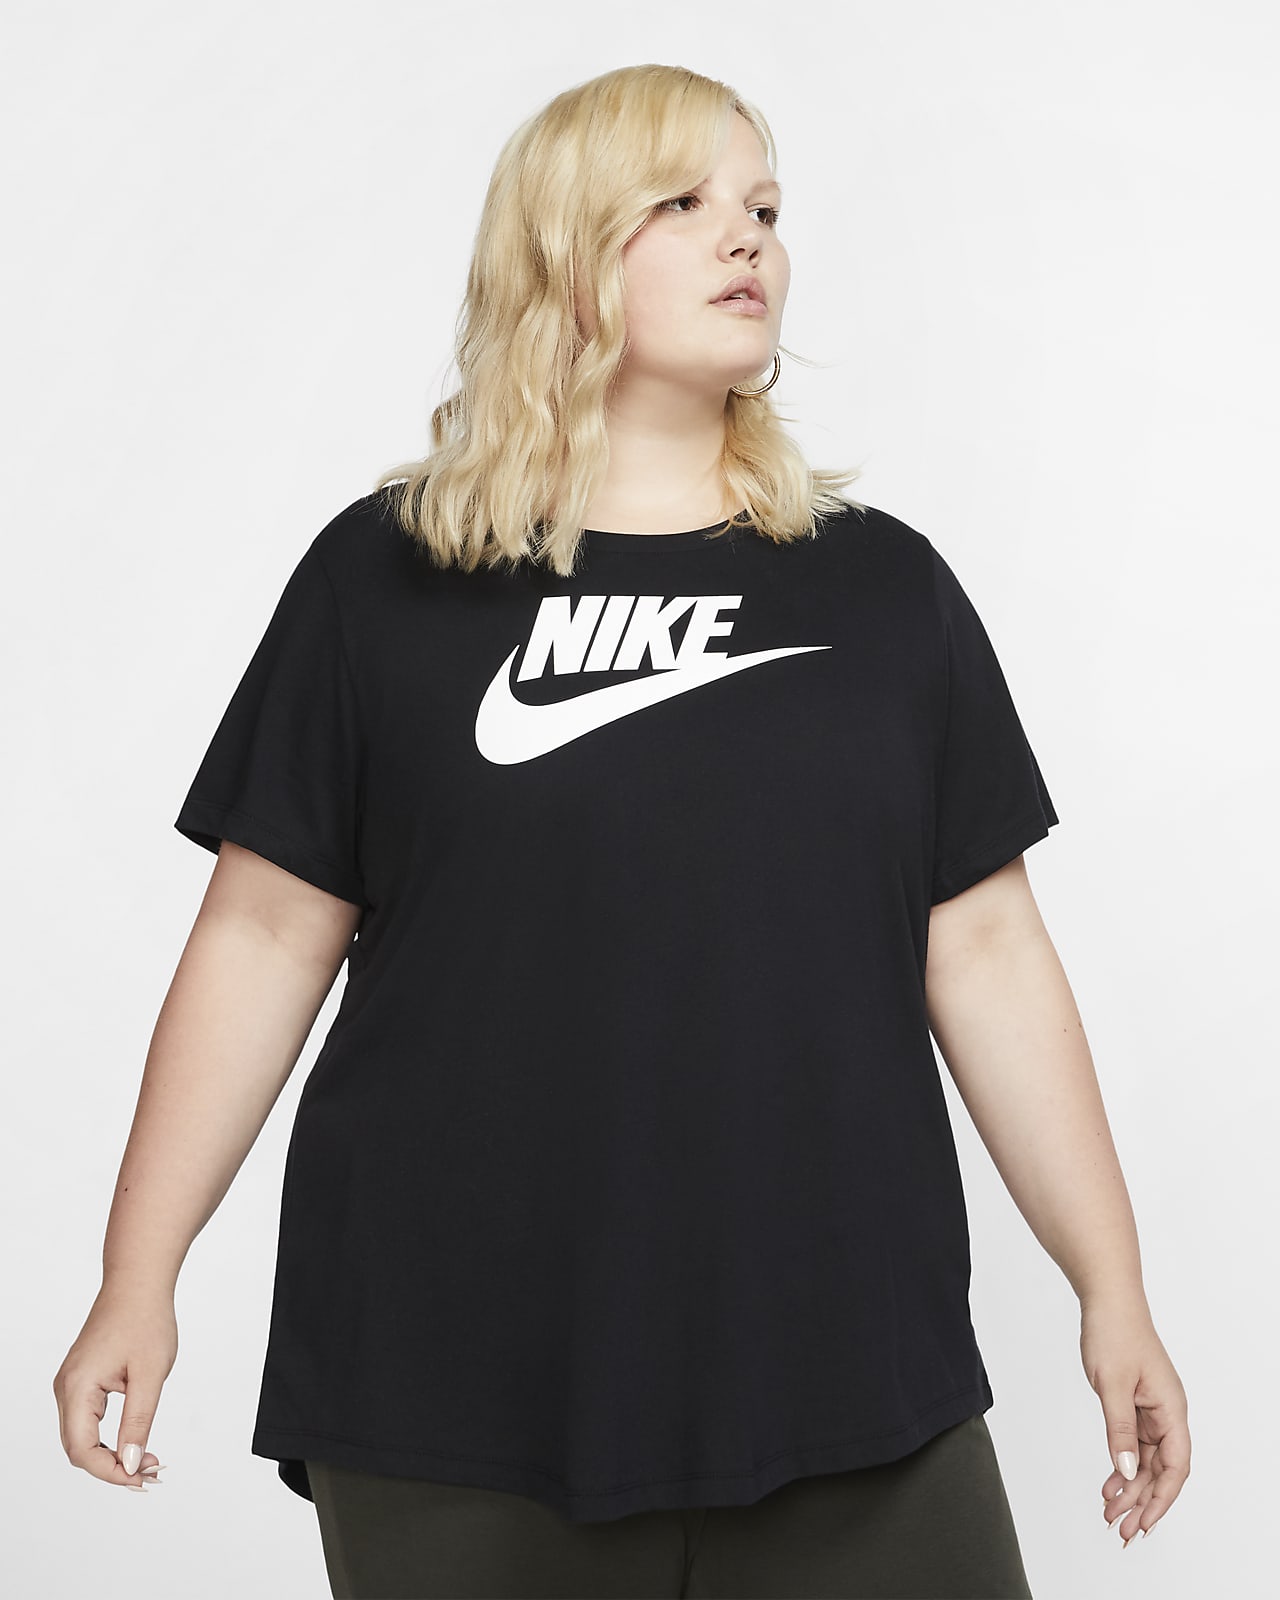 nike women's plus size shirts